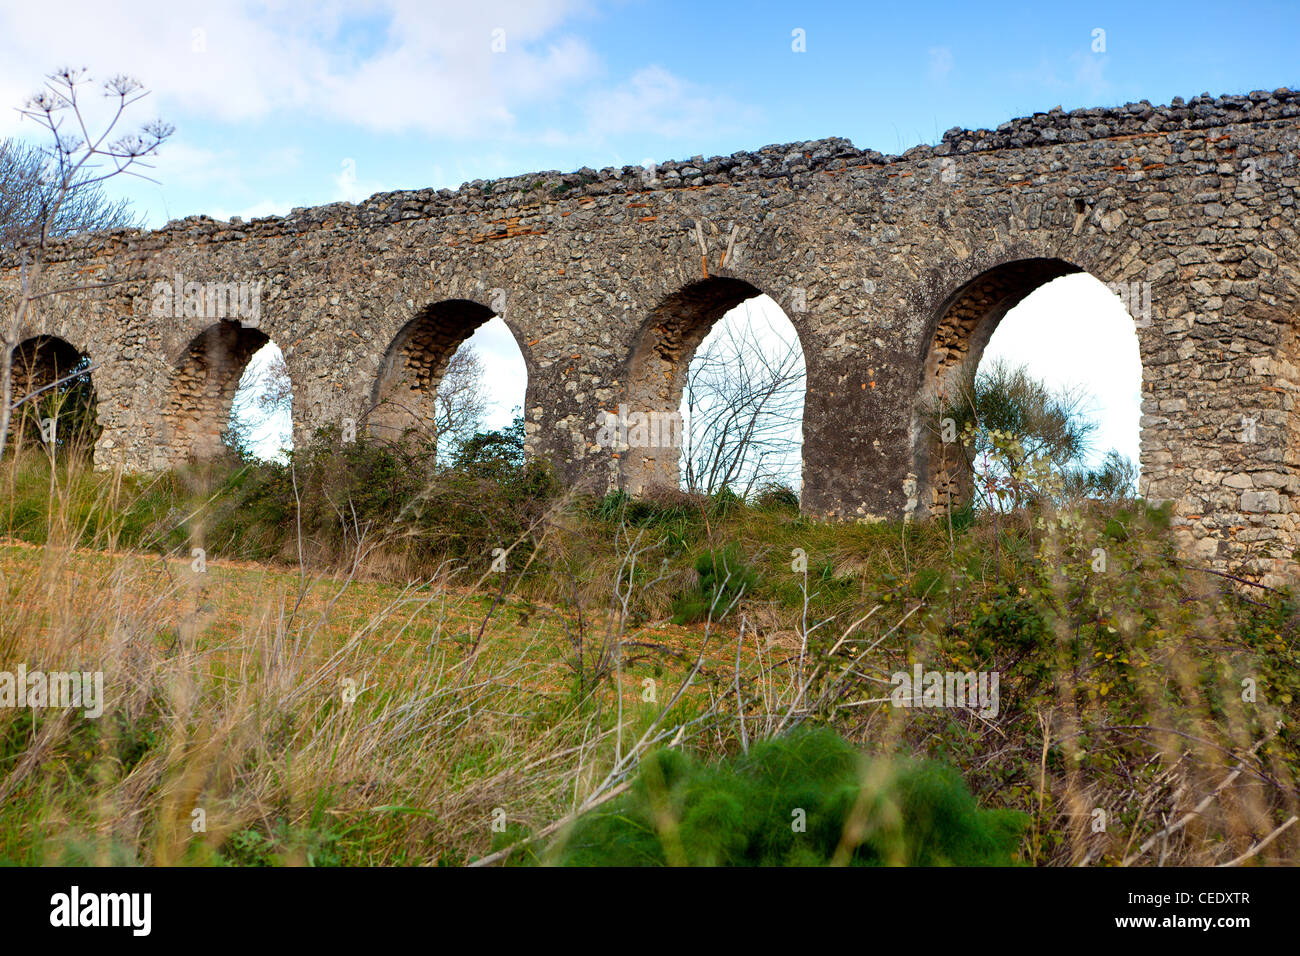 Roman aqueduct Stock Photo